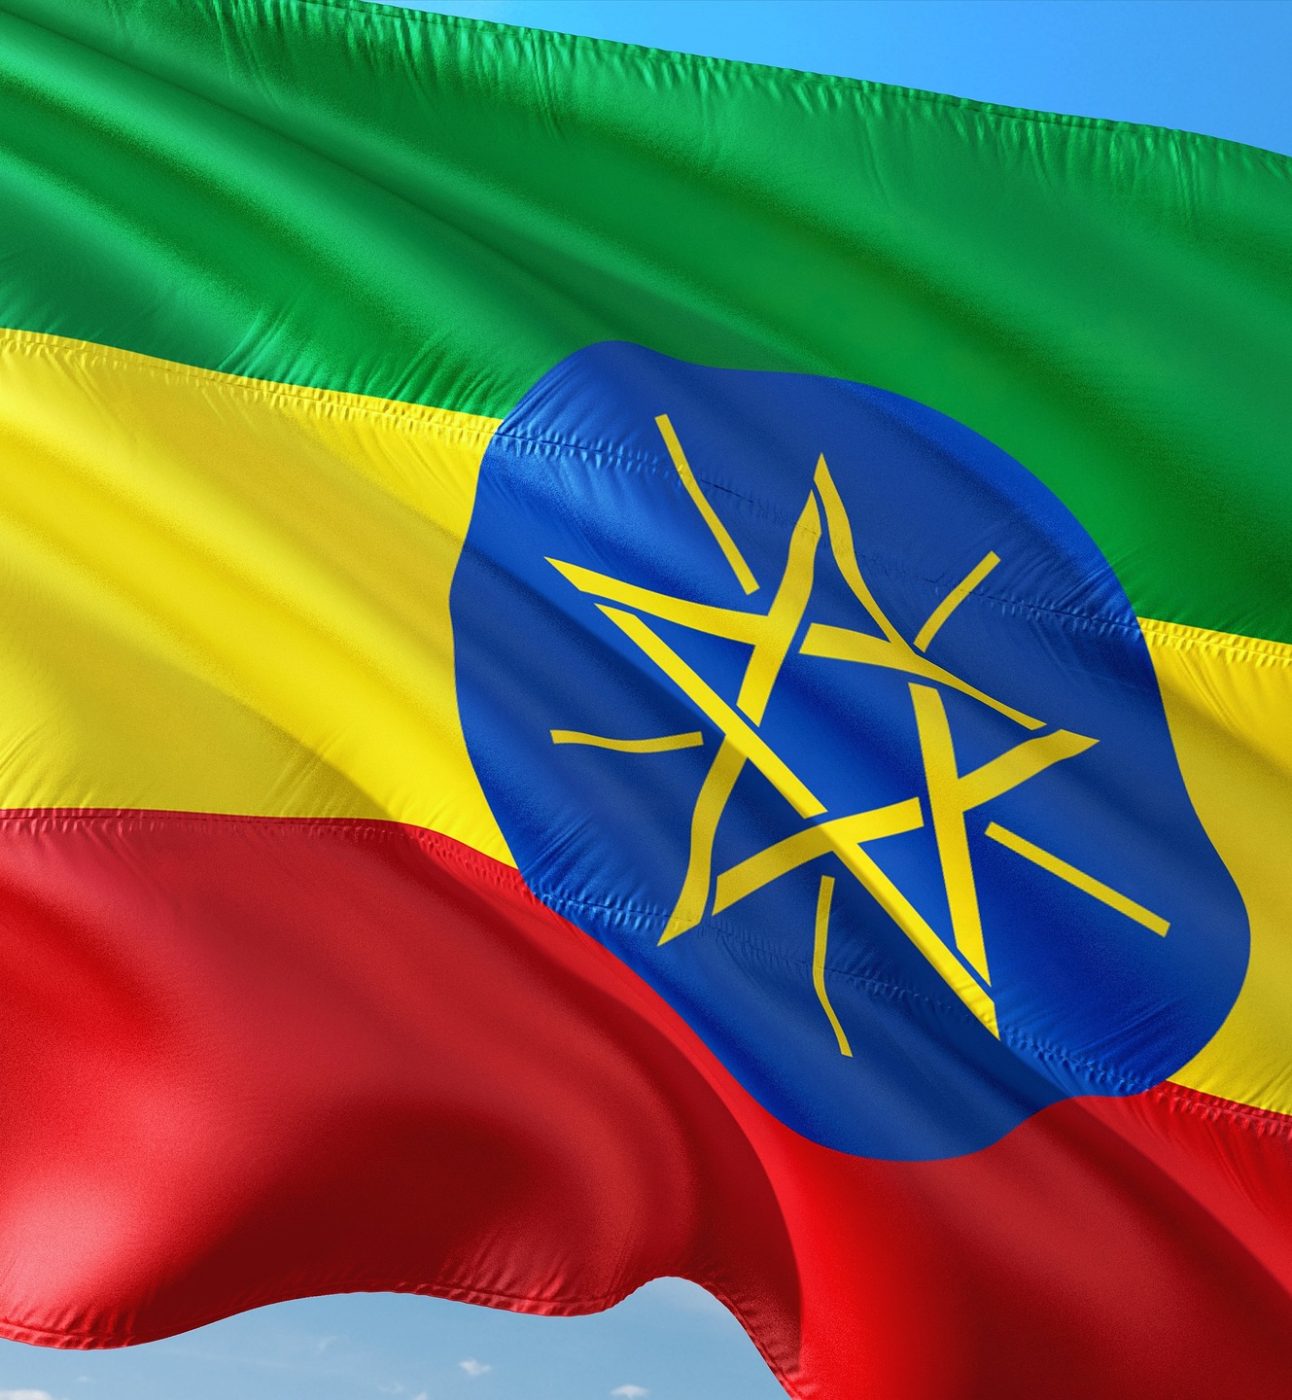 The national flag of Ethiopia